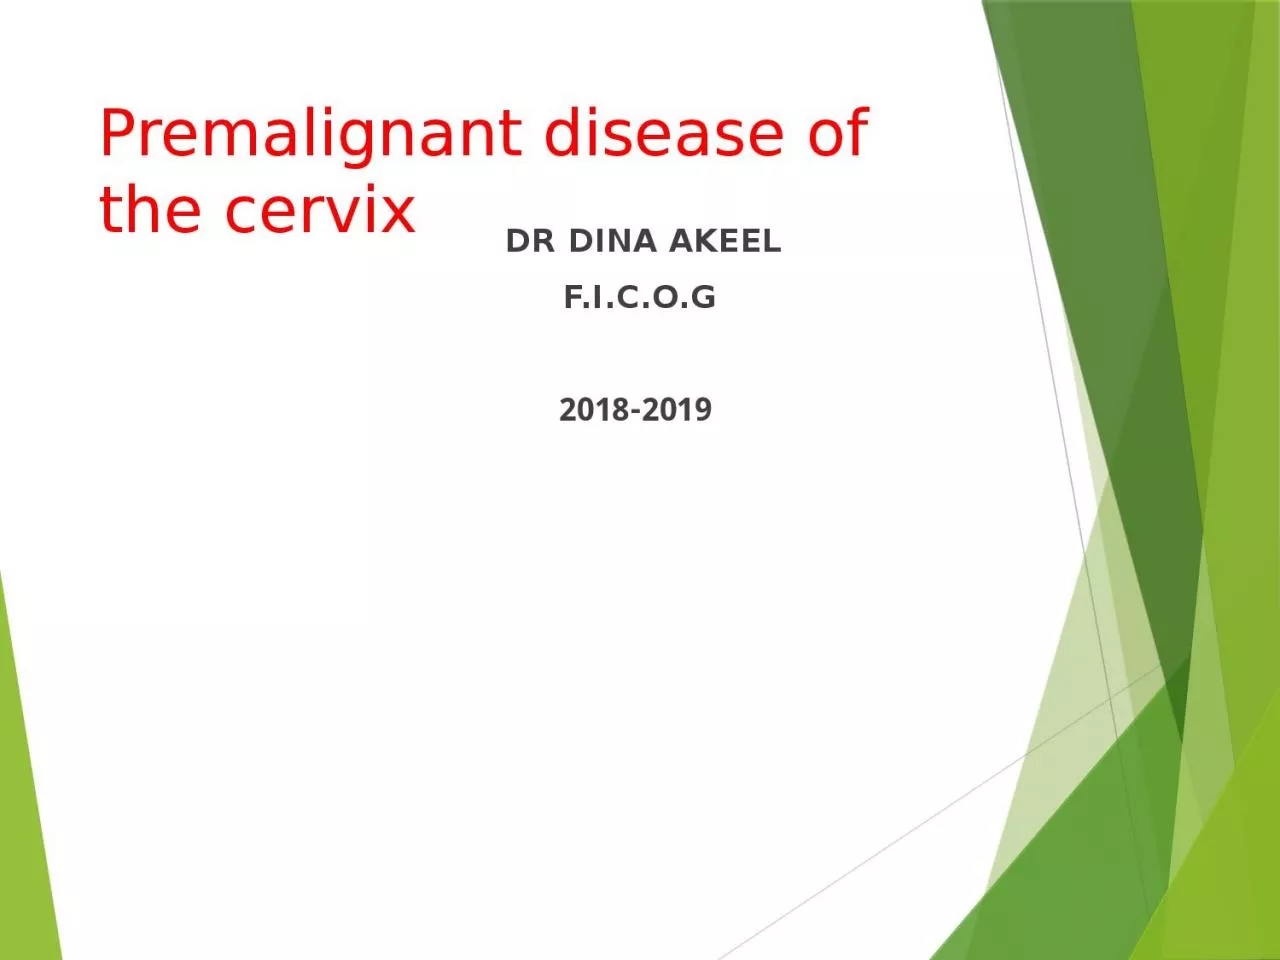 Premalignant disease of the cervix